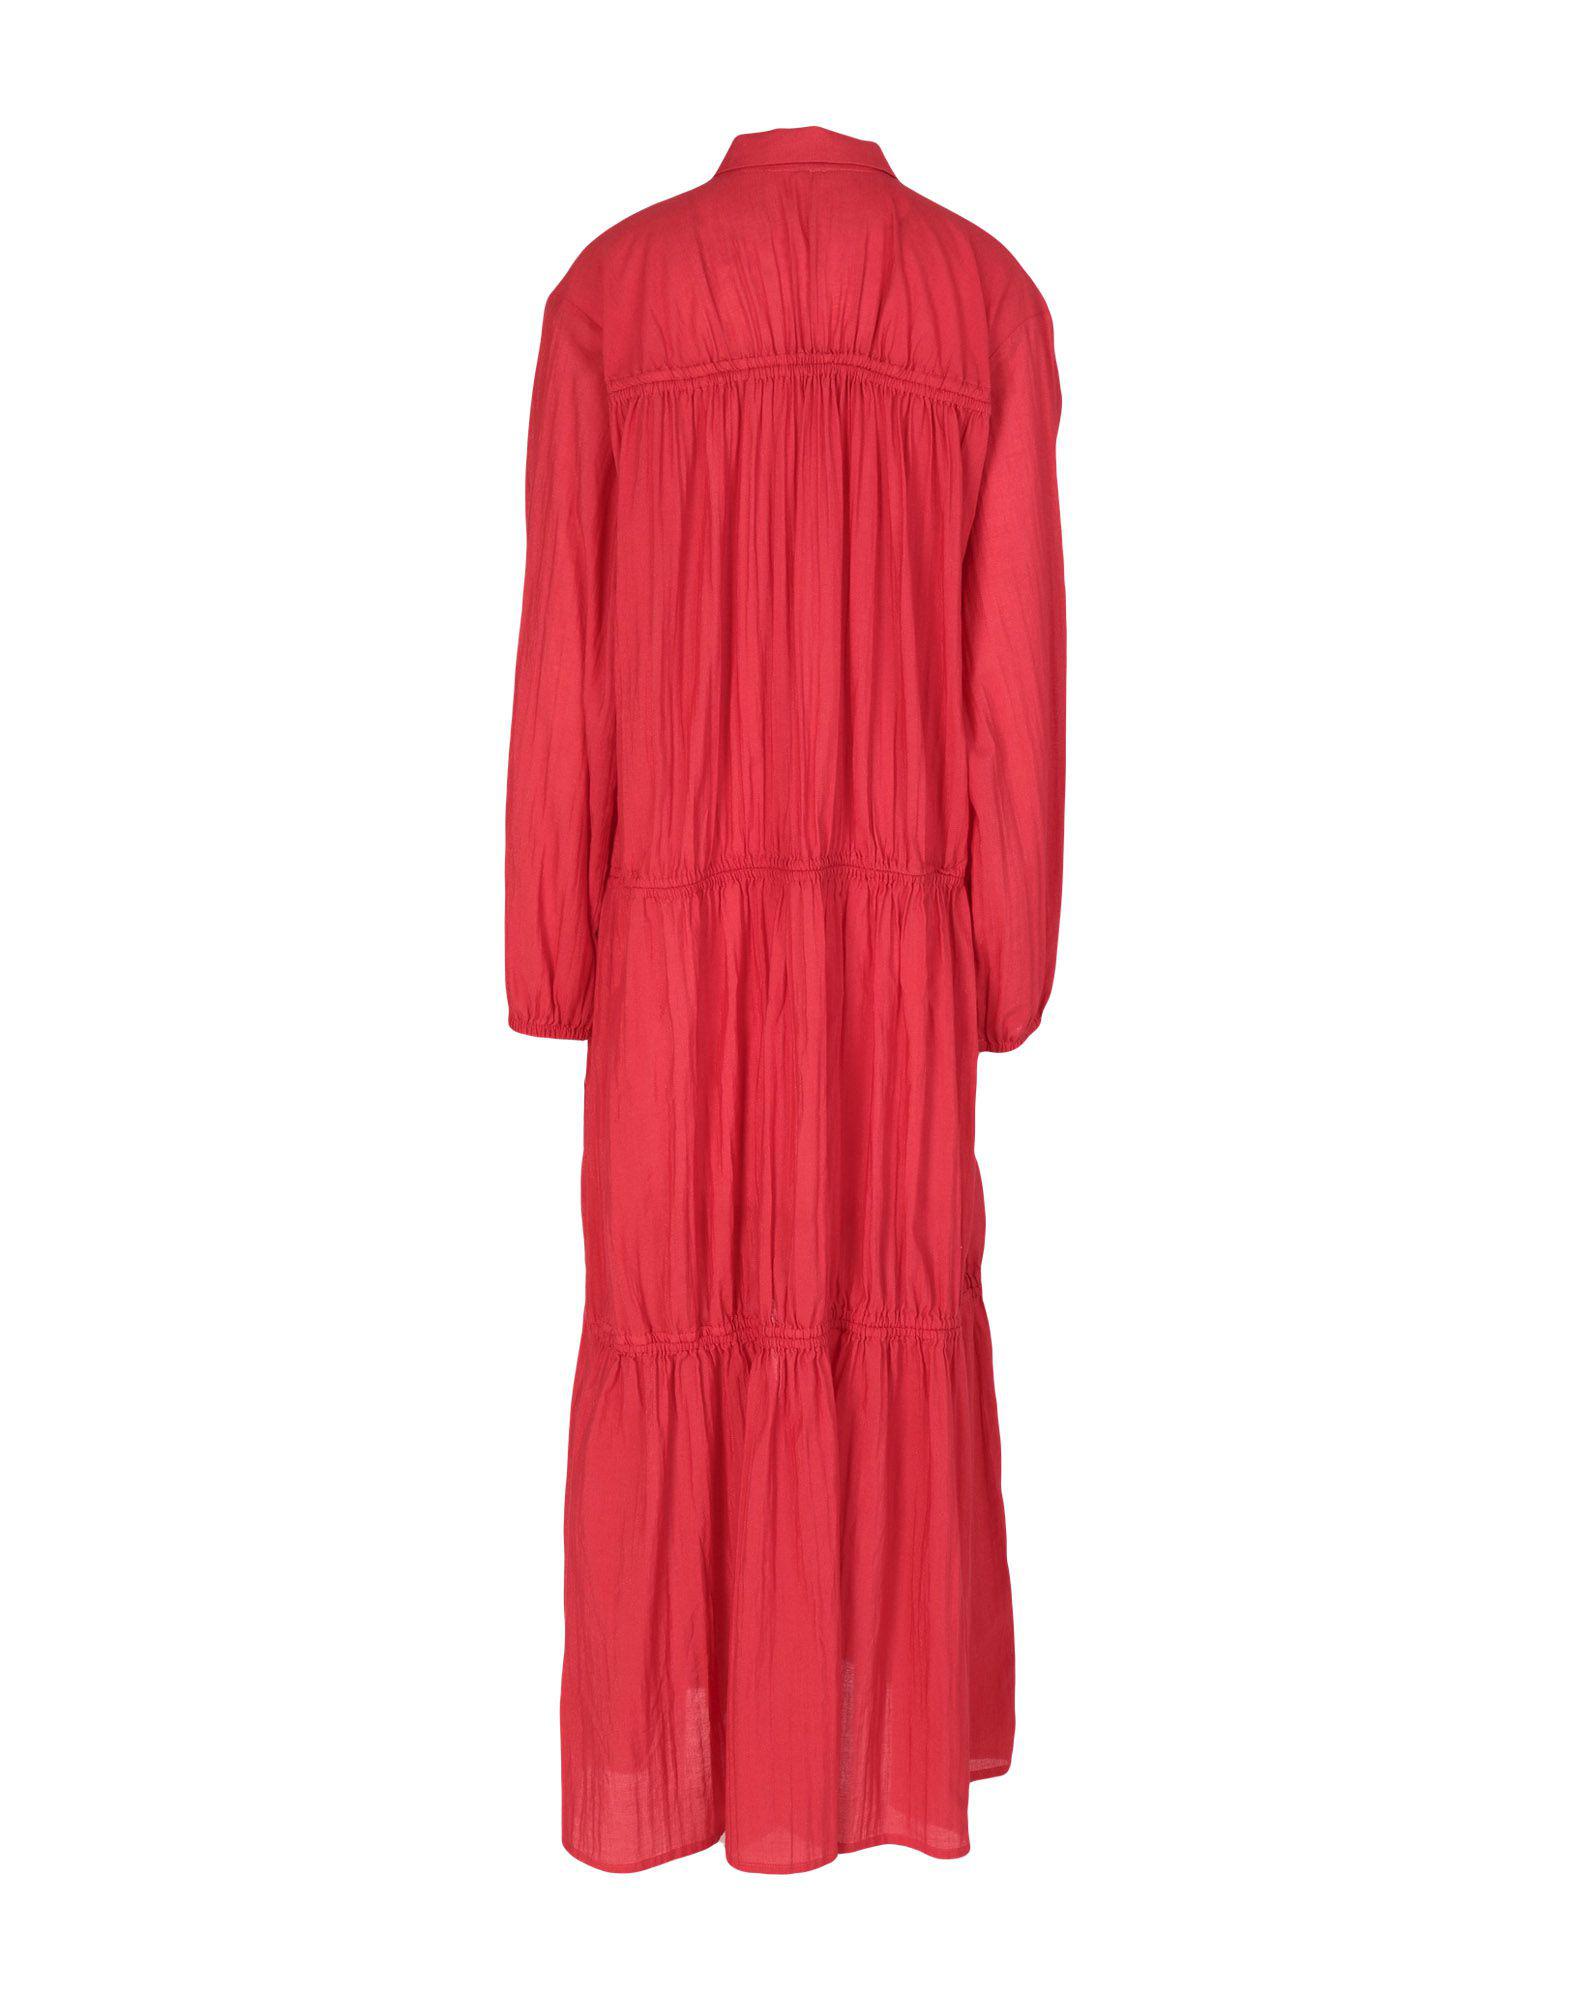 Suoli Cotton Long Dress in Red - Lyst